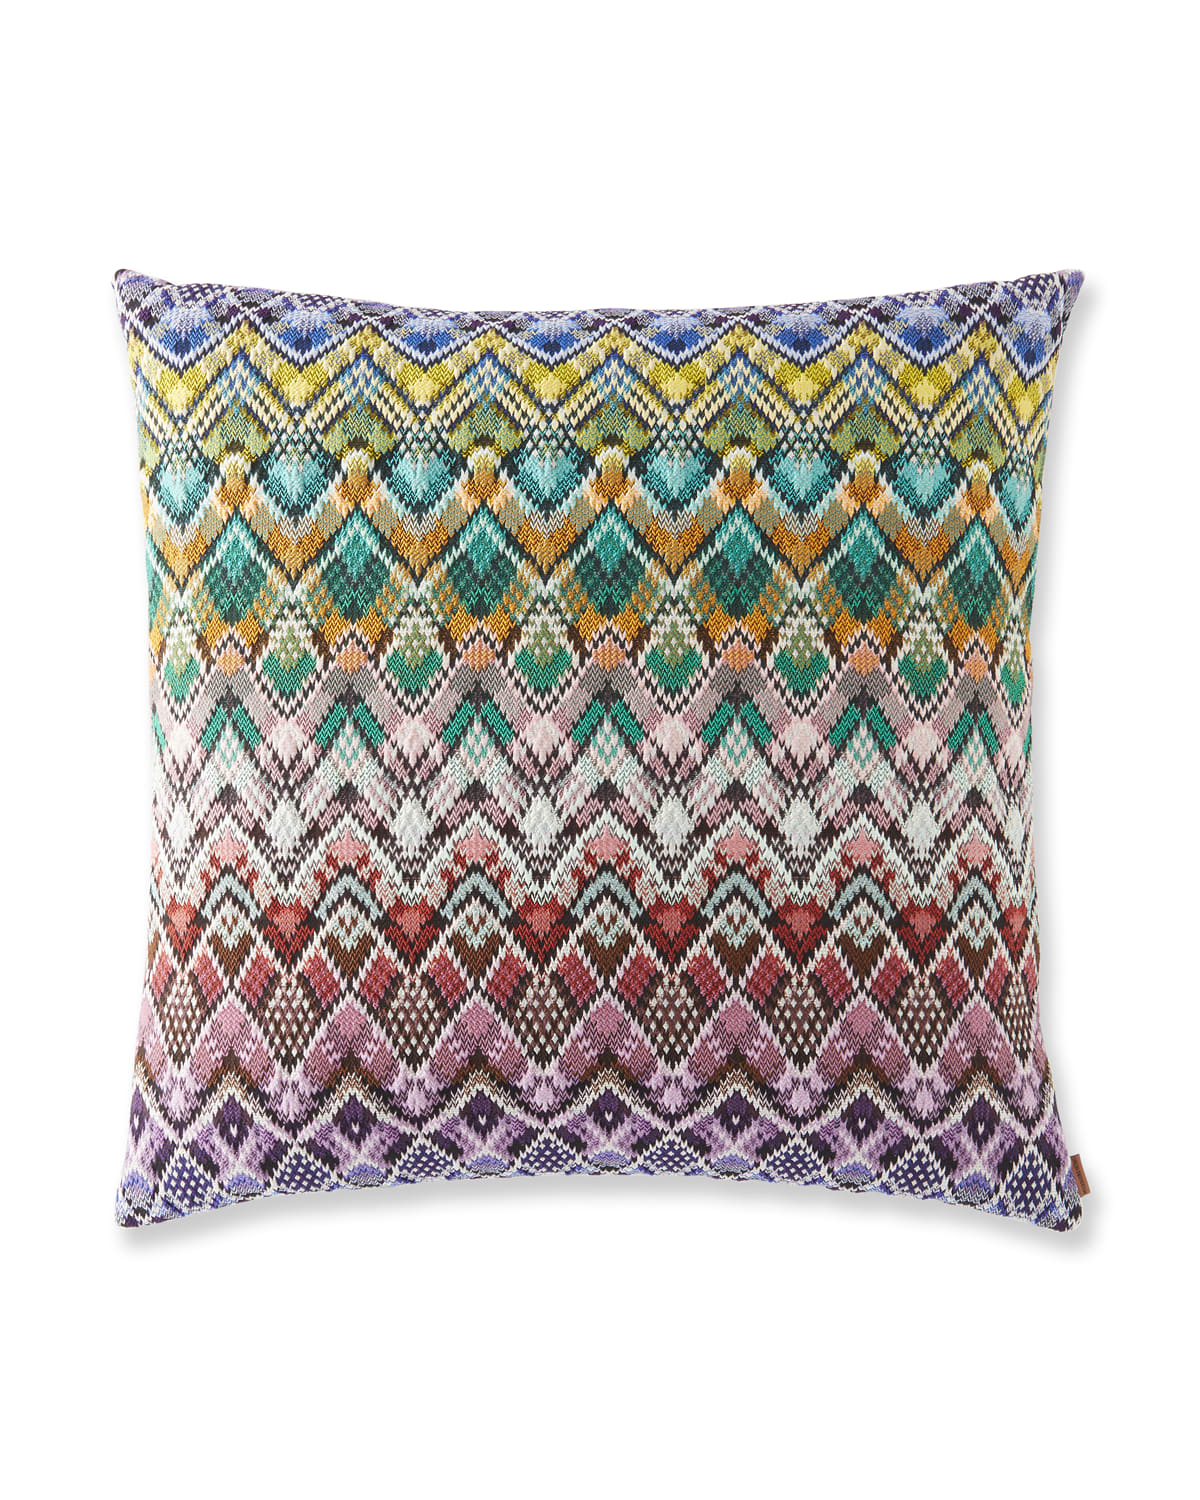 Missoni Amarillo Decorative Pillow, 24"